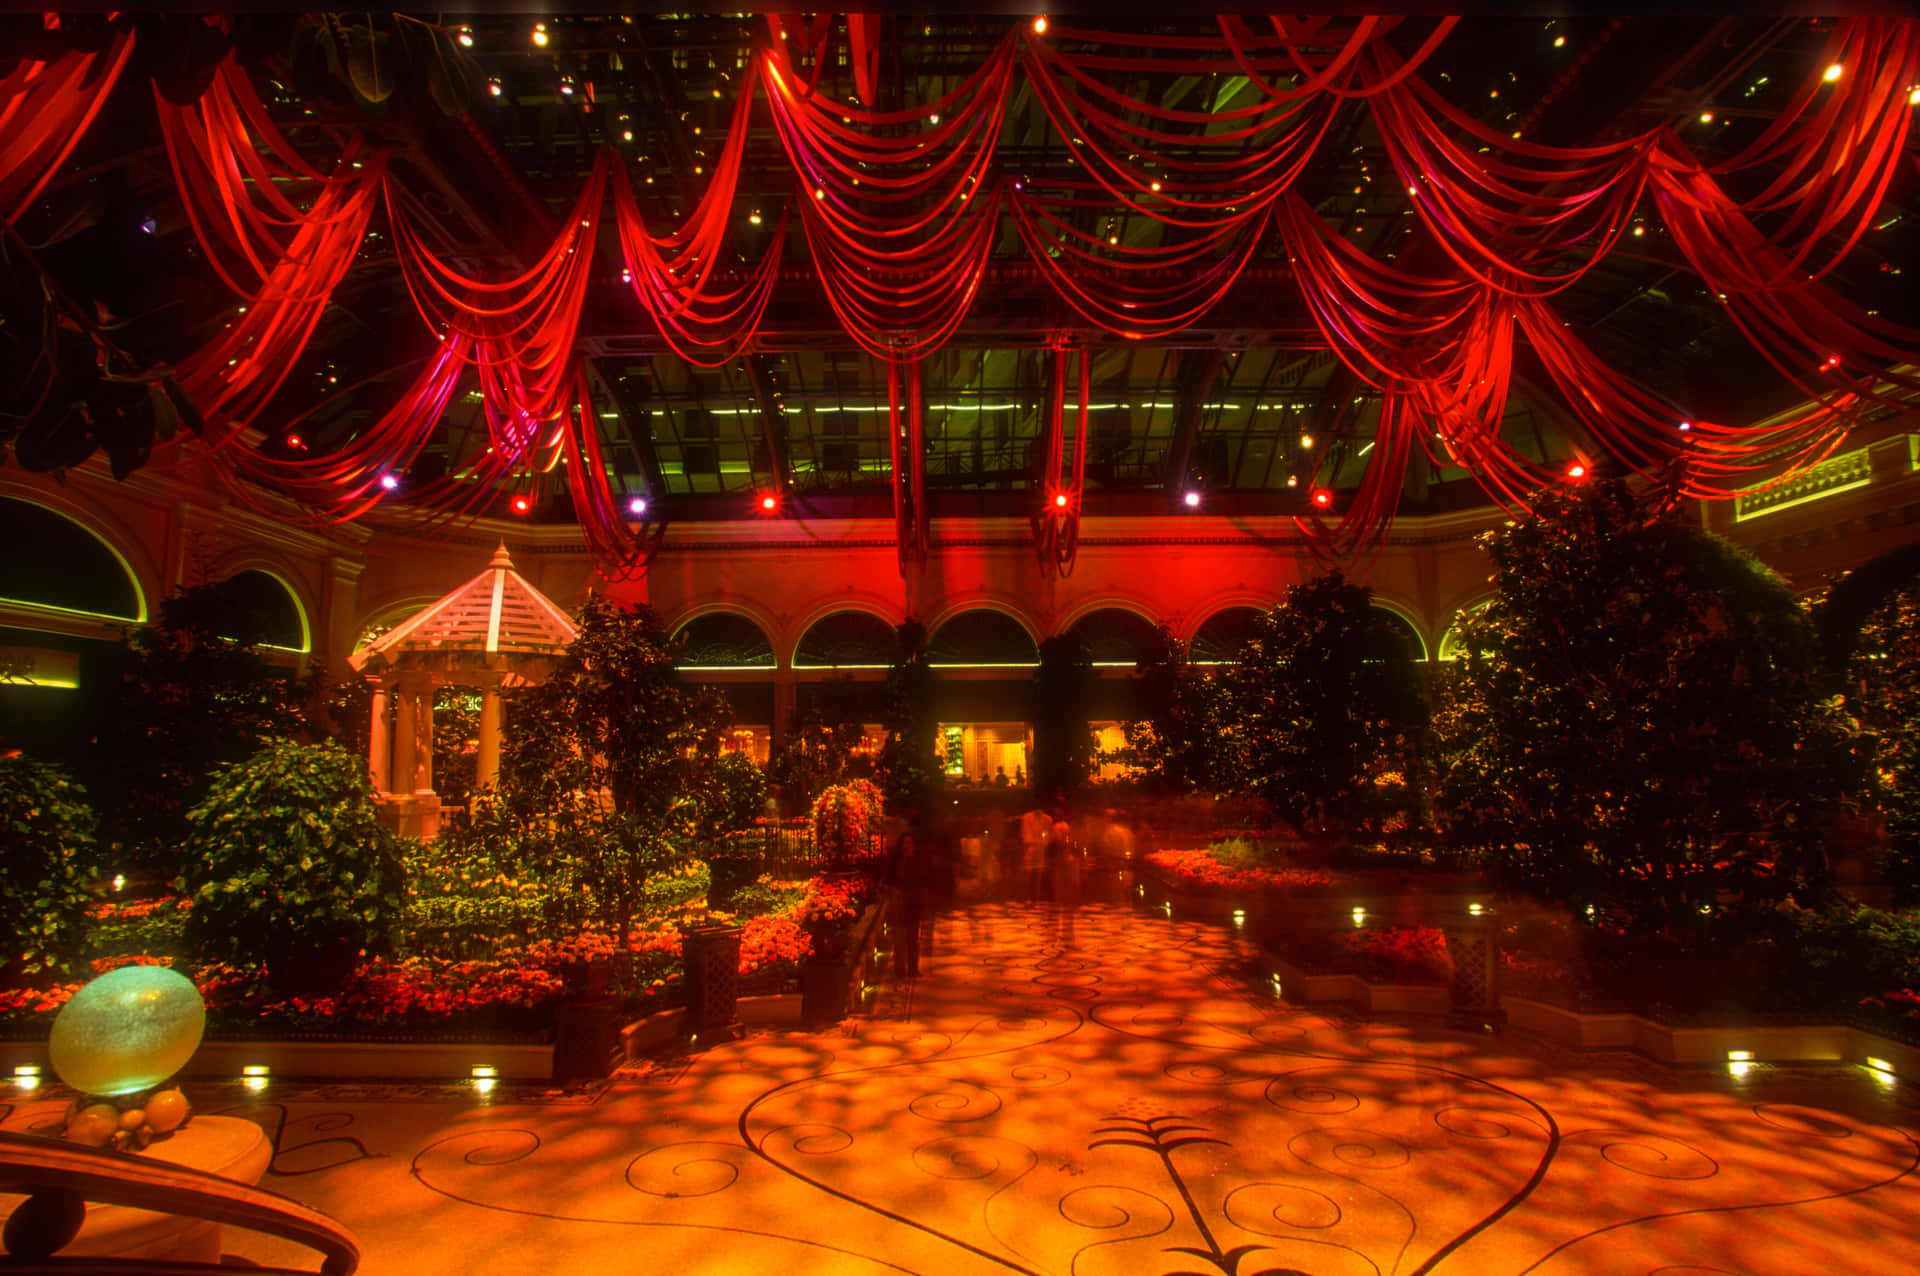 Take a romantic stroll across a beautiful ballroom.